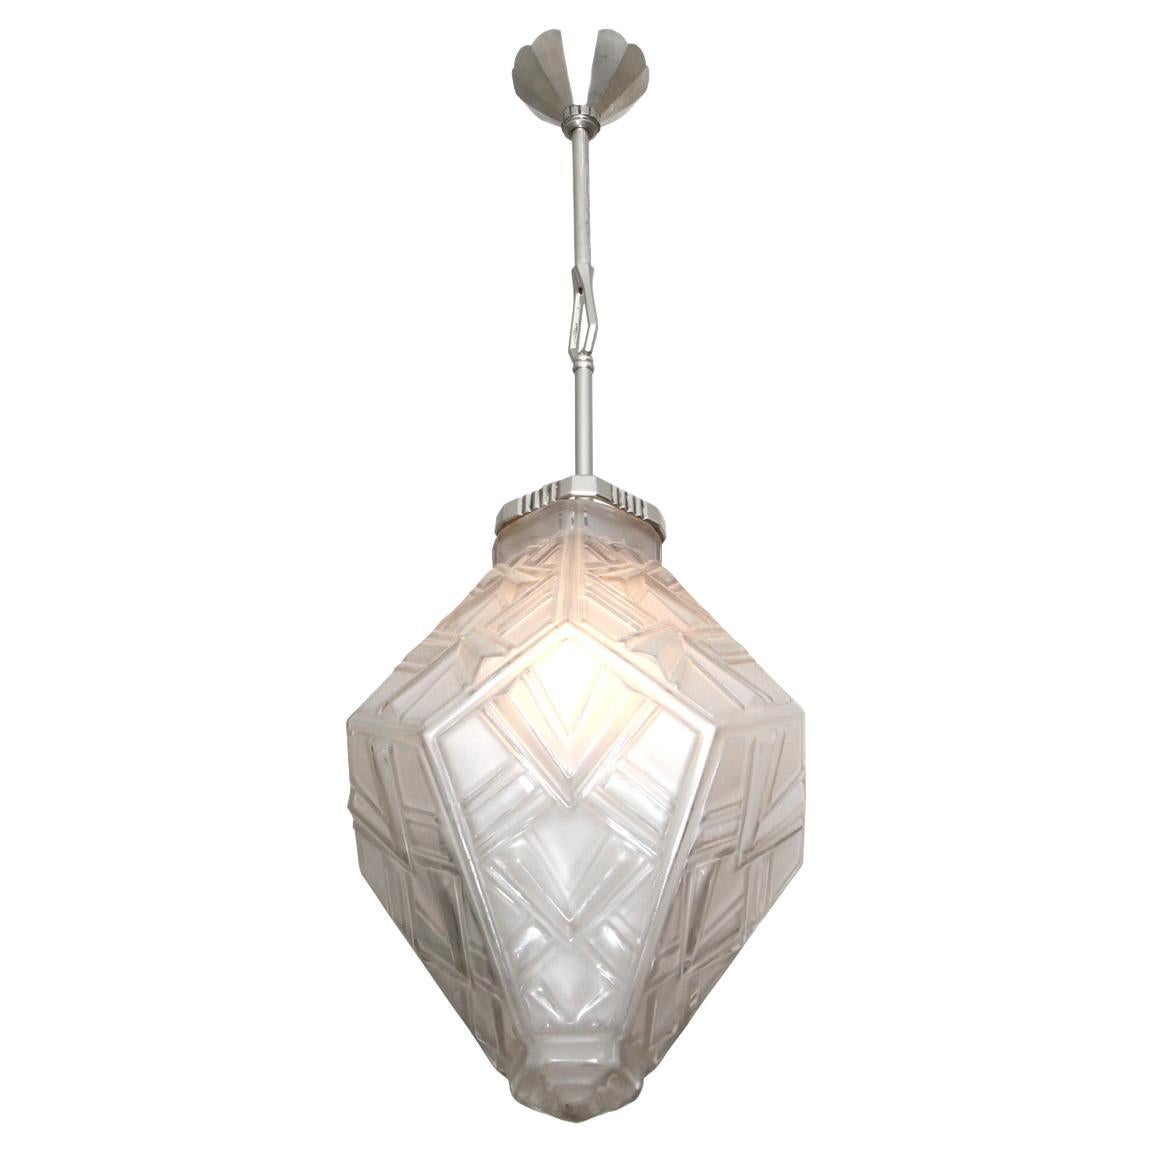 French Art Deco lantern chandelier  by Genet & Michon  For Sale